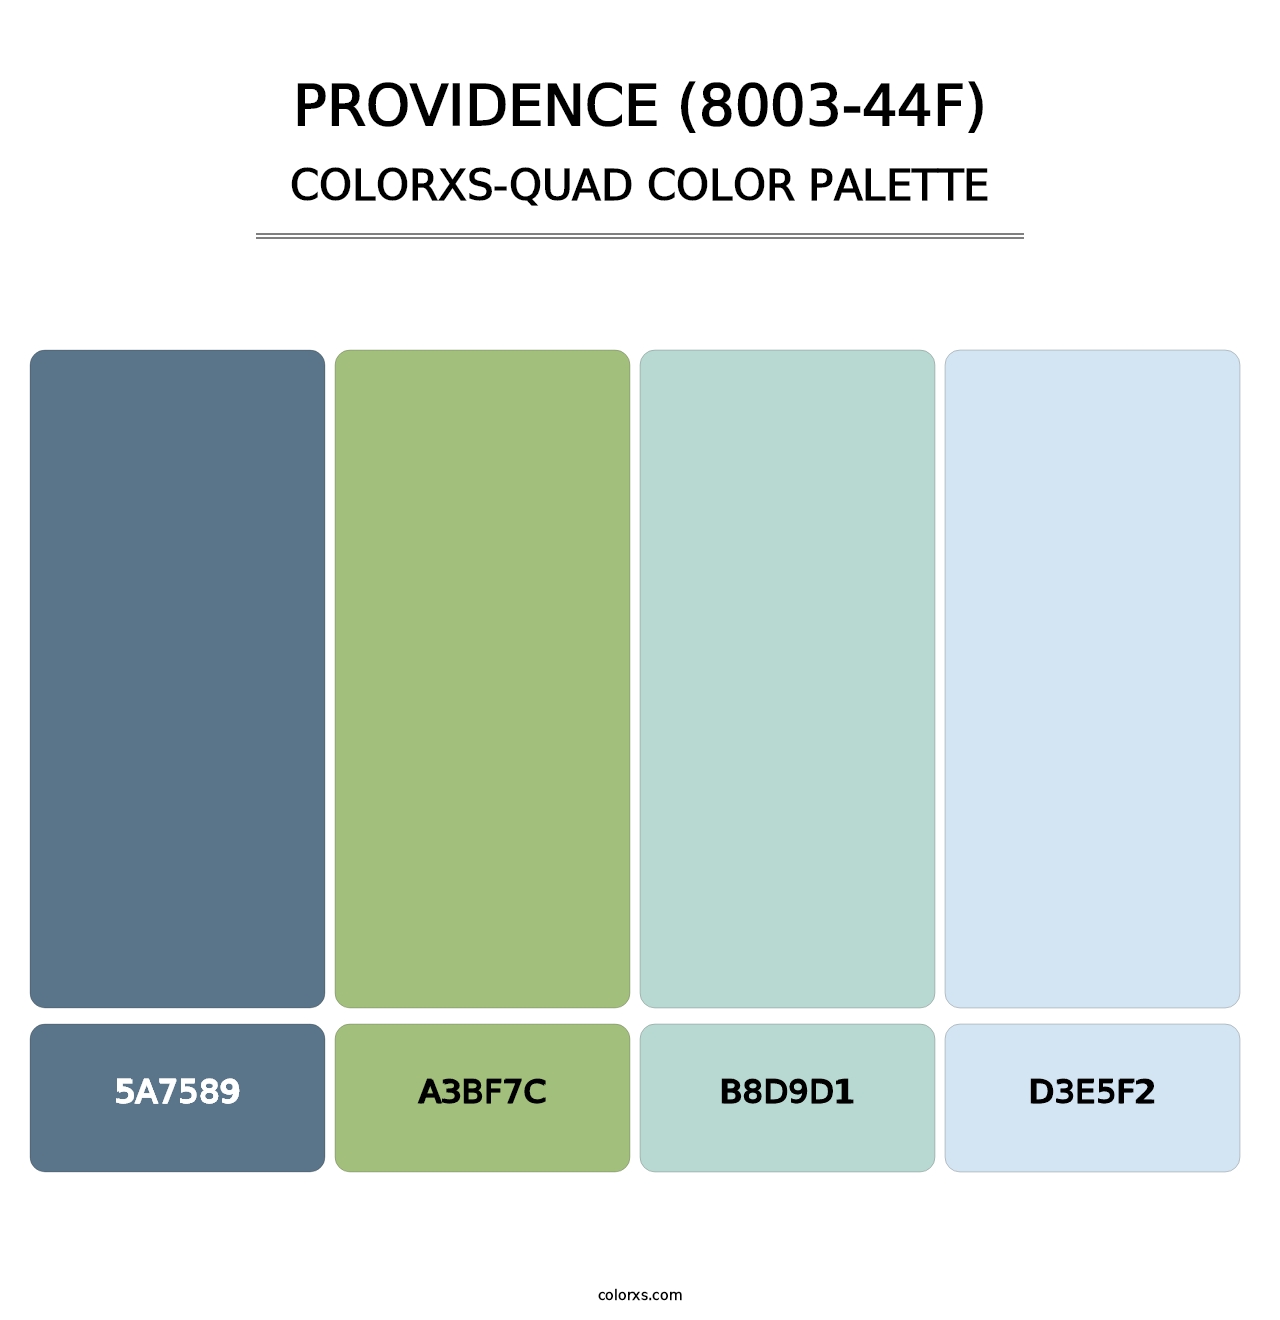 Providence (8003-44F) - Colorxs Quad Palette